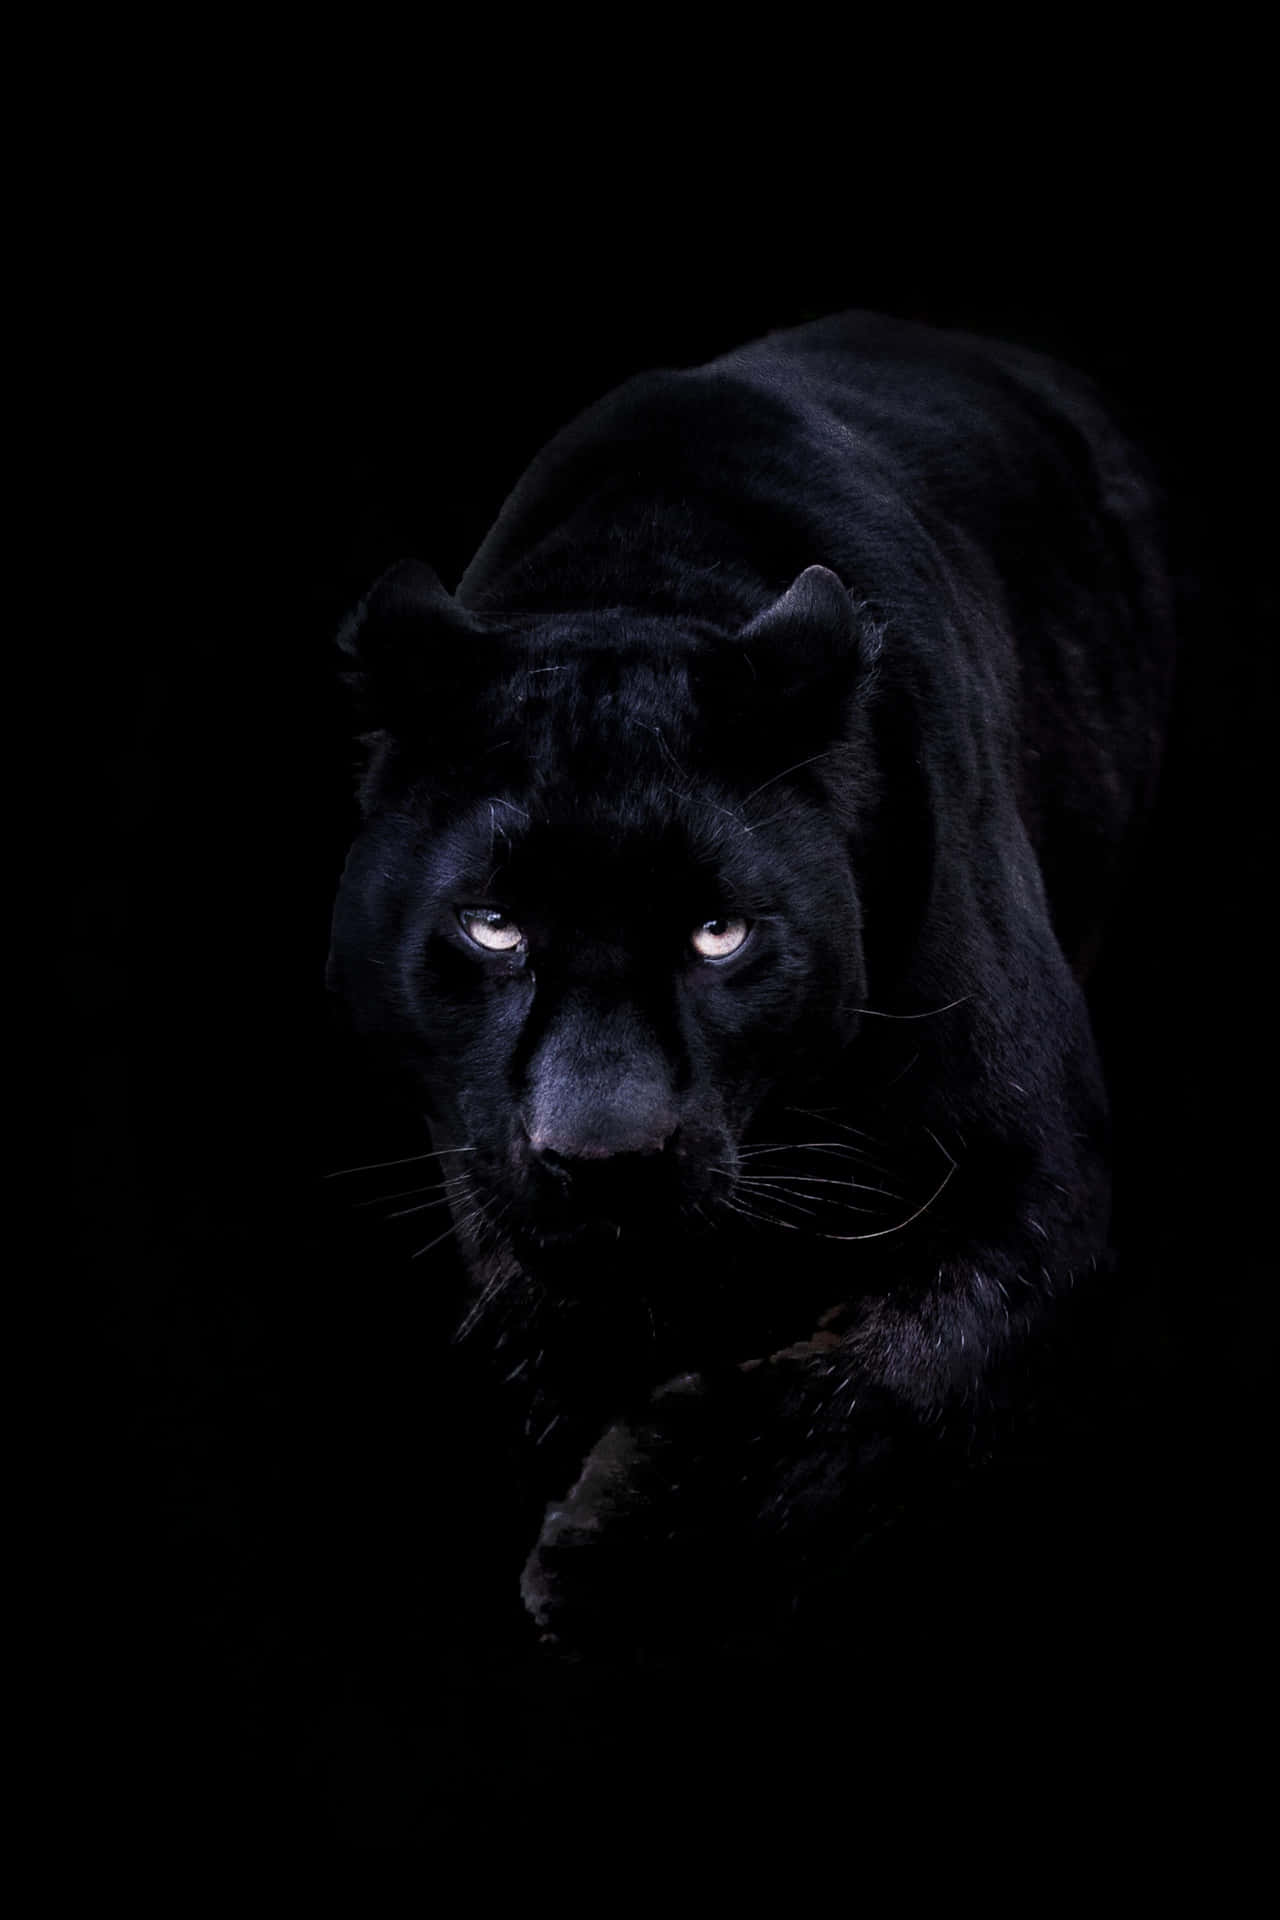 Say Hi to this Majestic Cool Black Panther Animal Wallpaper